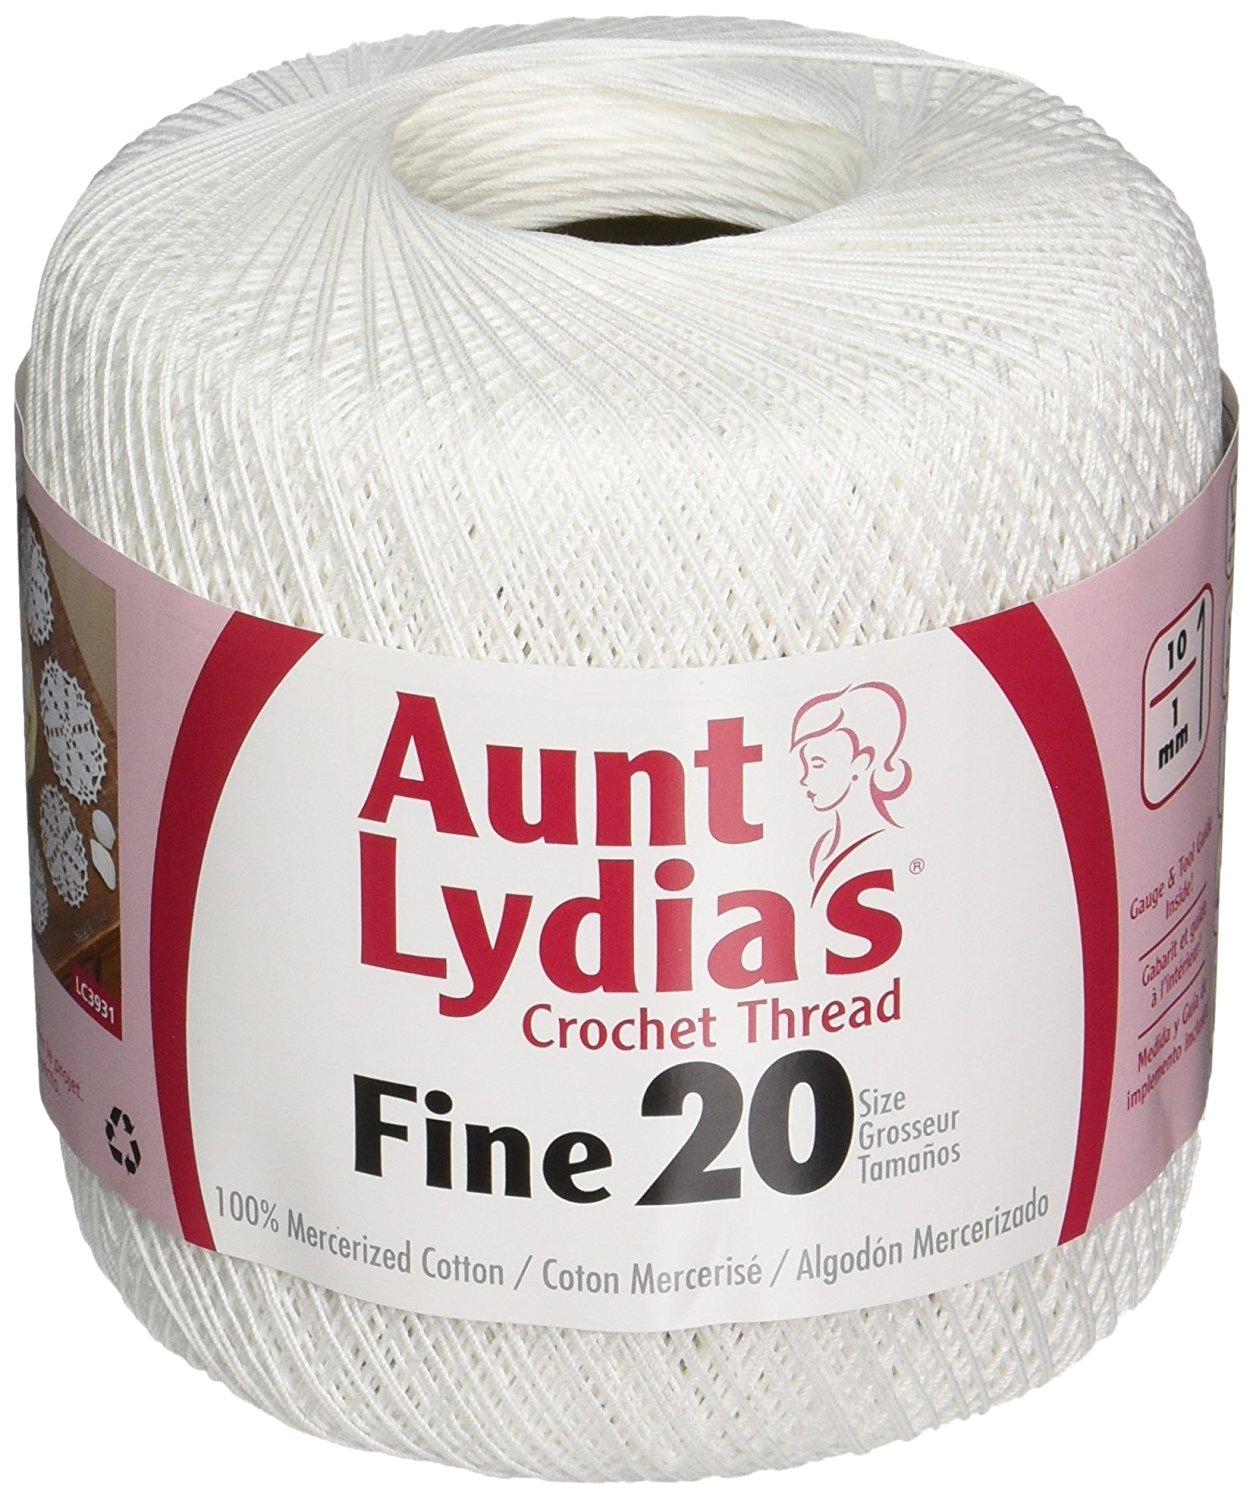 Aunt Lydias Crochet Thread classic 10 